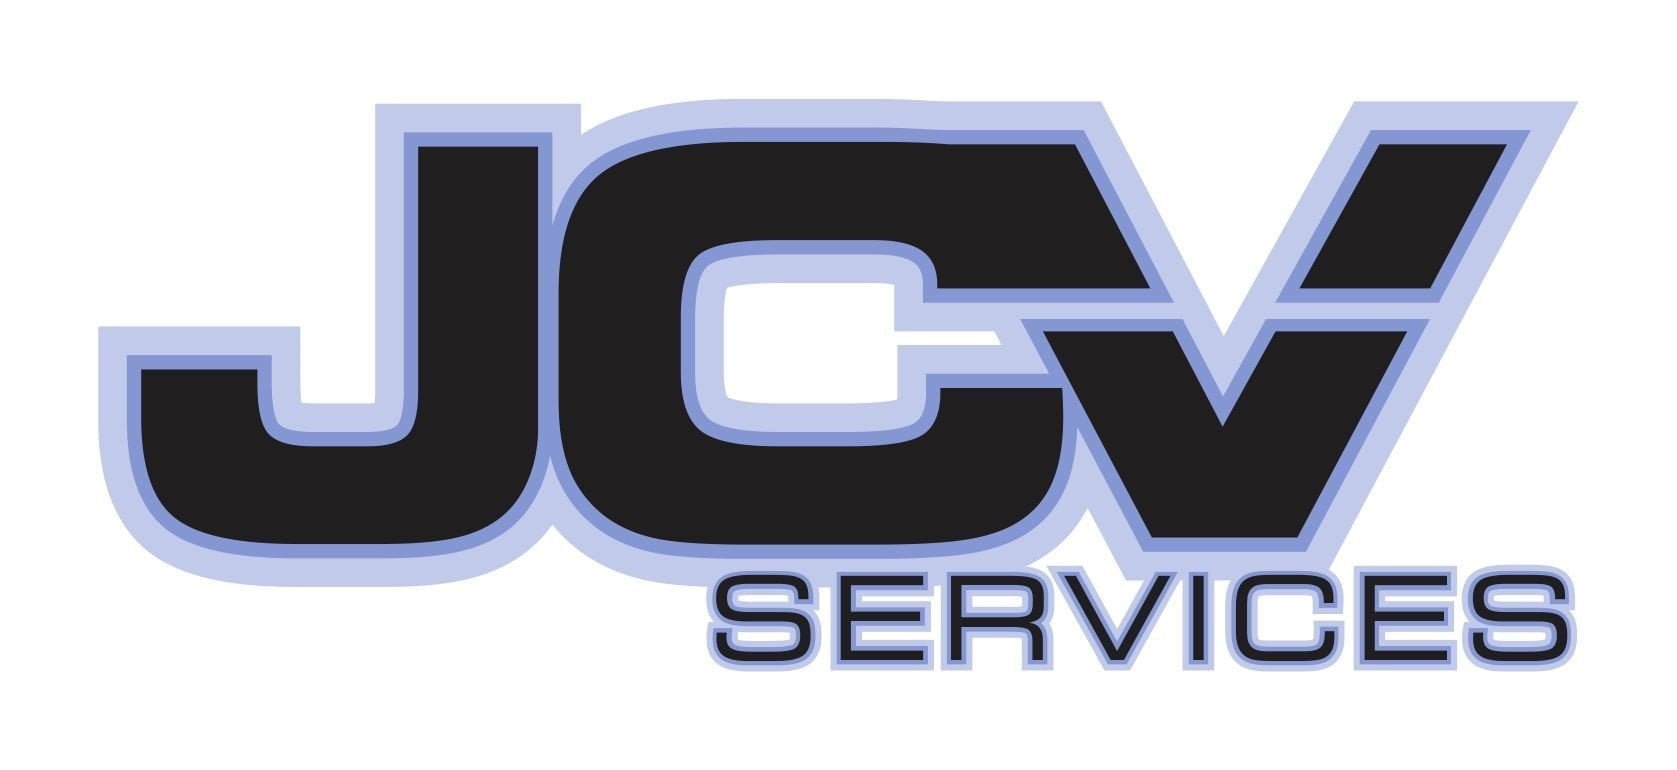 JCV-Services-logo-alumni-omp16